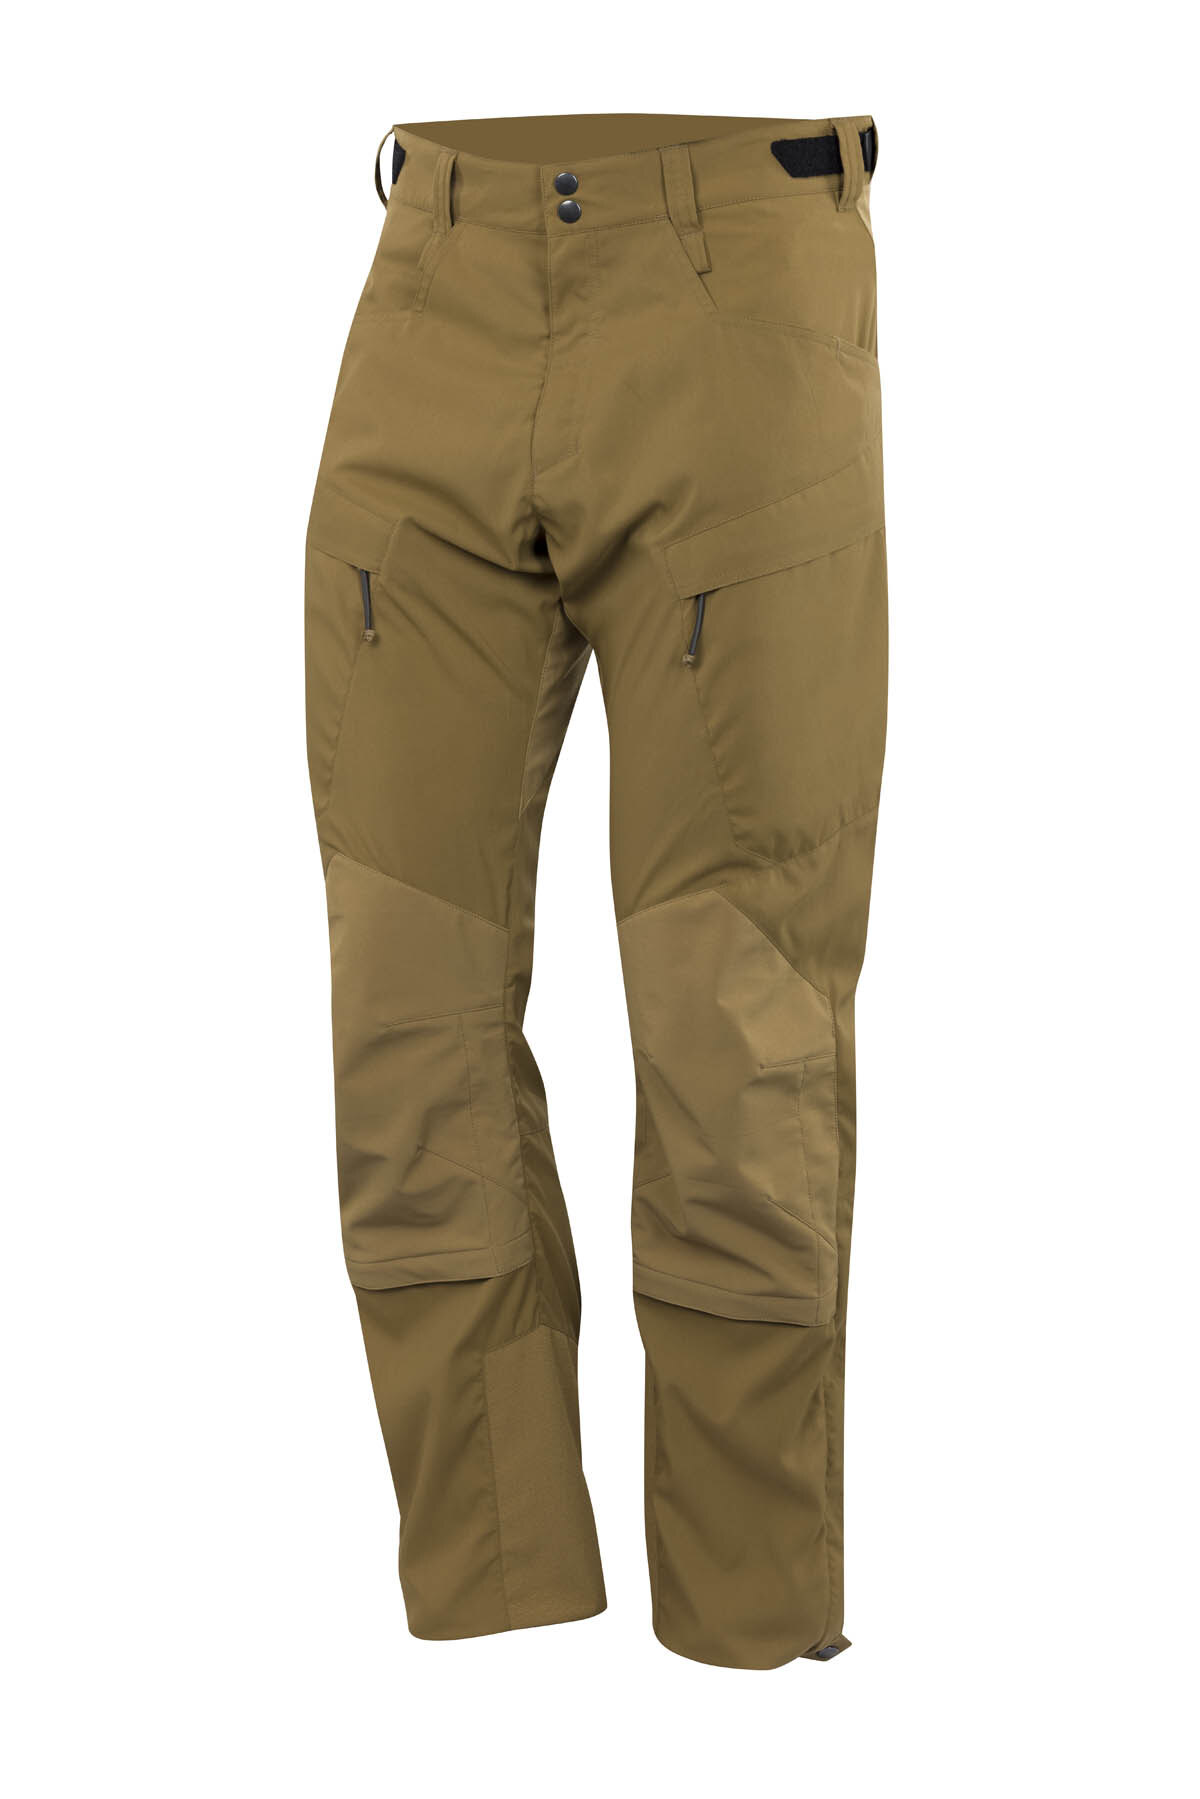 Softshellové kalhoty Operator Tilak Military Gear® – Coyote (Barva: Coyote, Velikost: L)